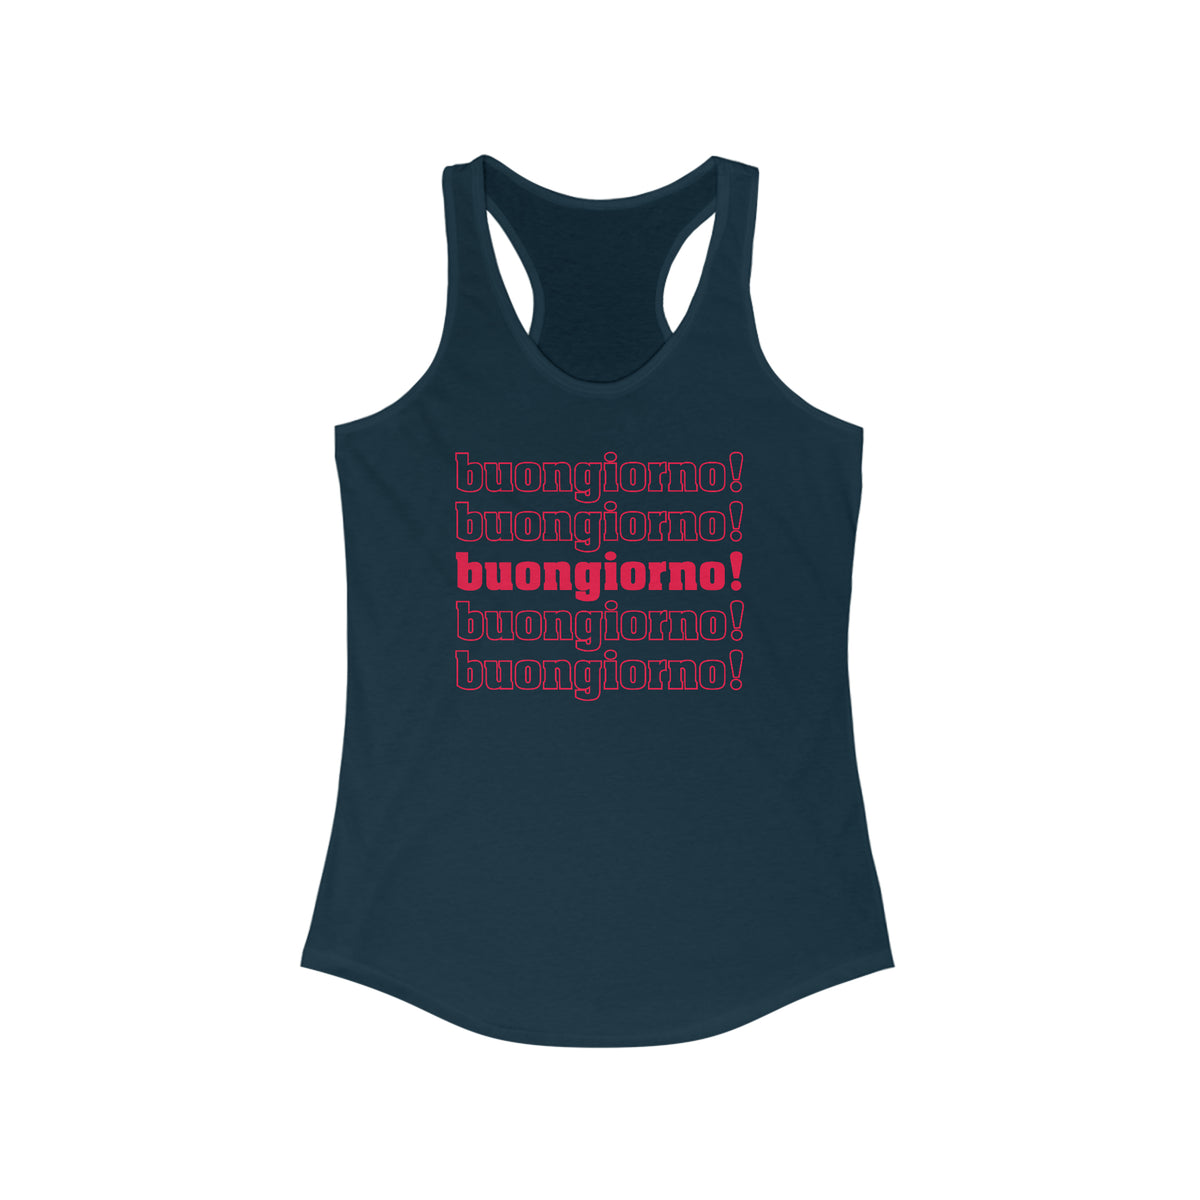 Buongiorno Good Morning Italy Shirts | Italian Language Gift For Her | Women's Racerback Tank Top